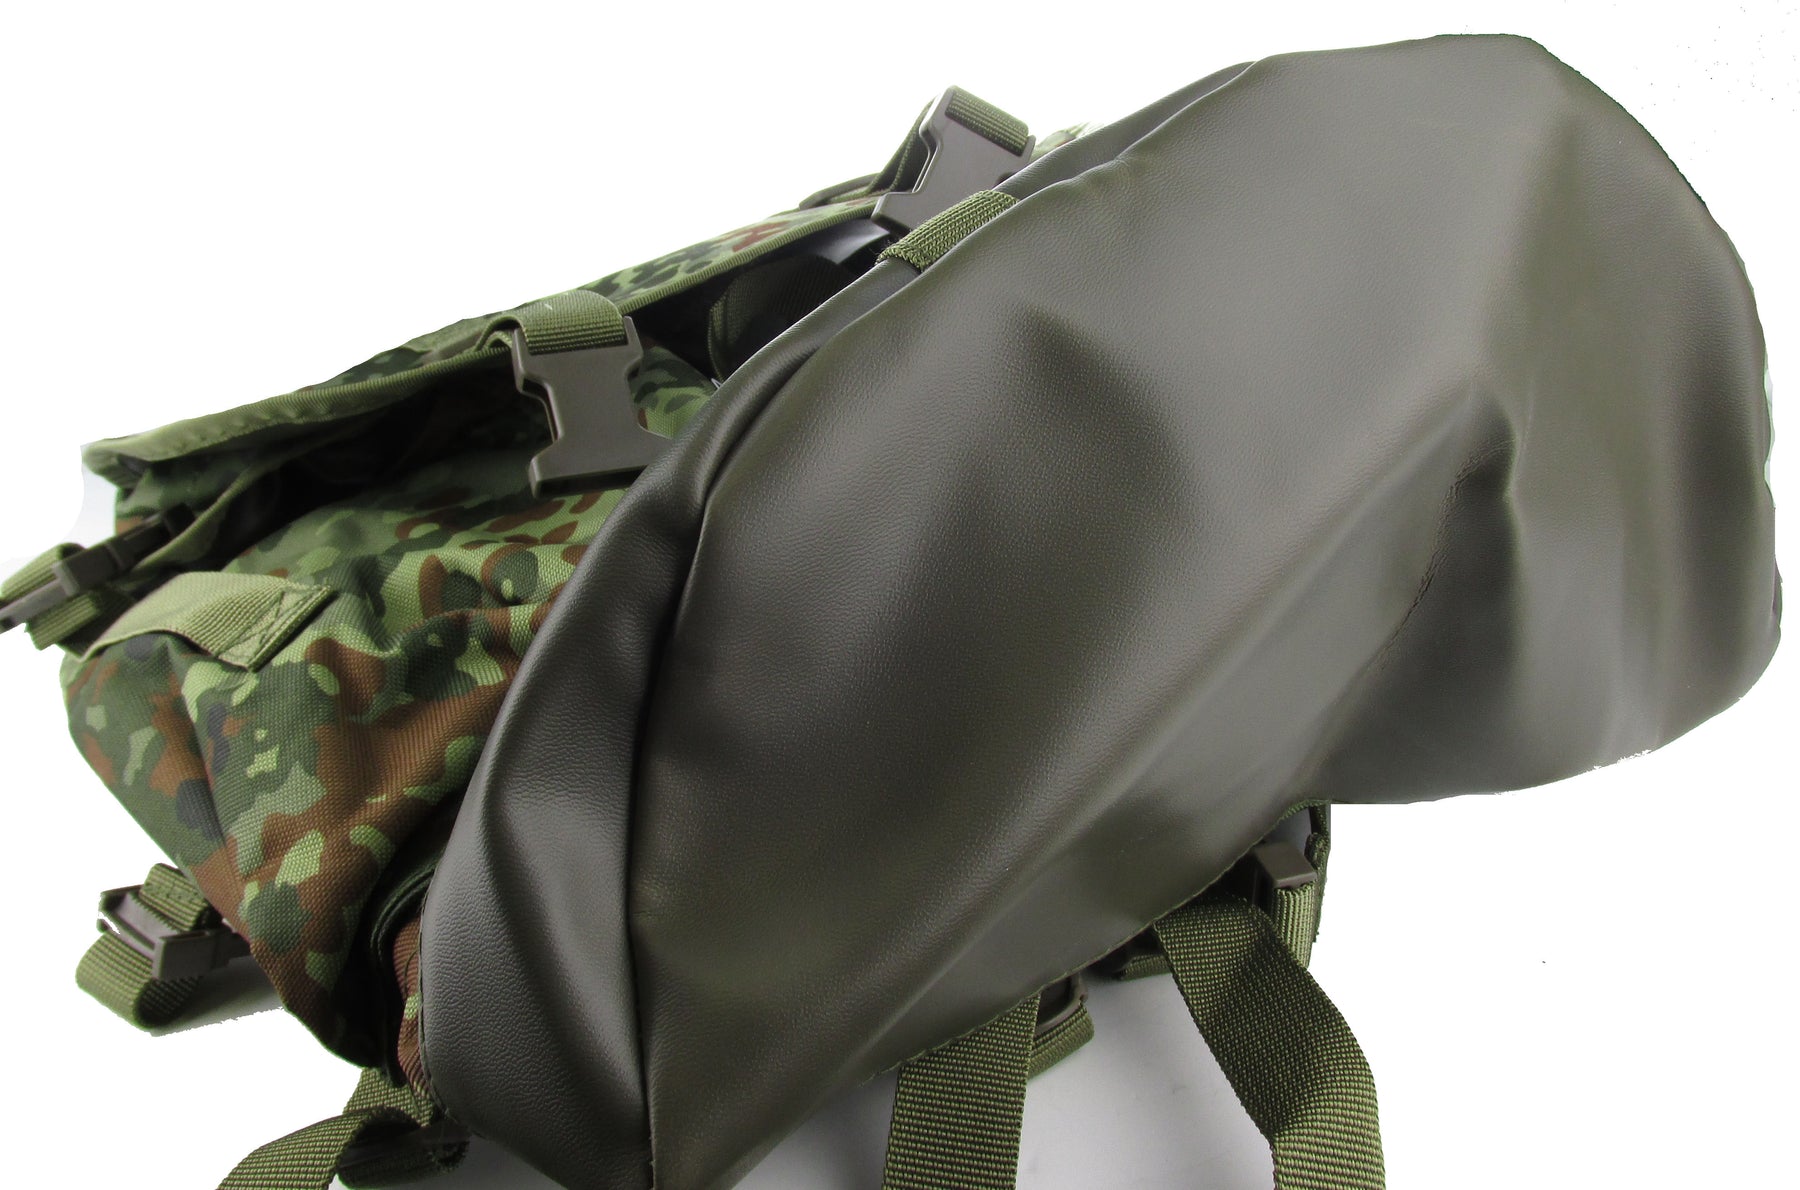 German Army Style Bundeswehr Mountain Backpack - Flecktarn Camo